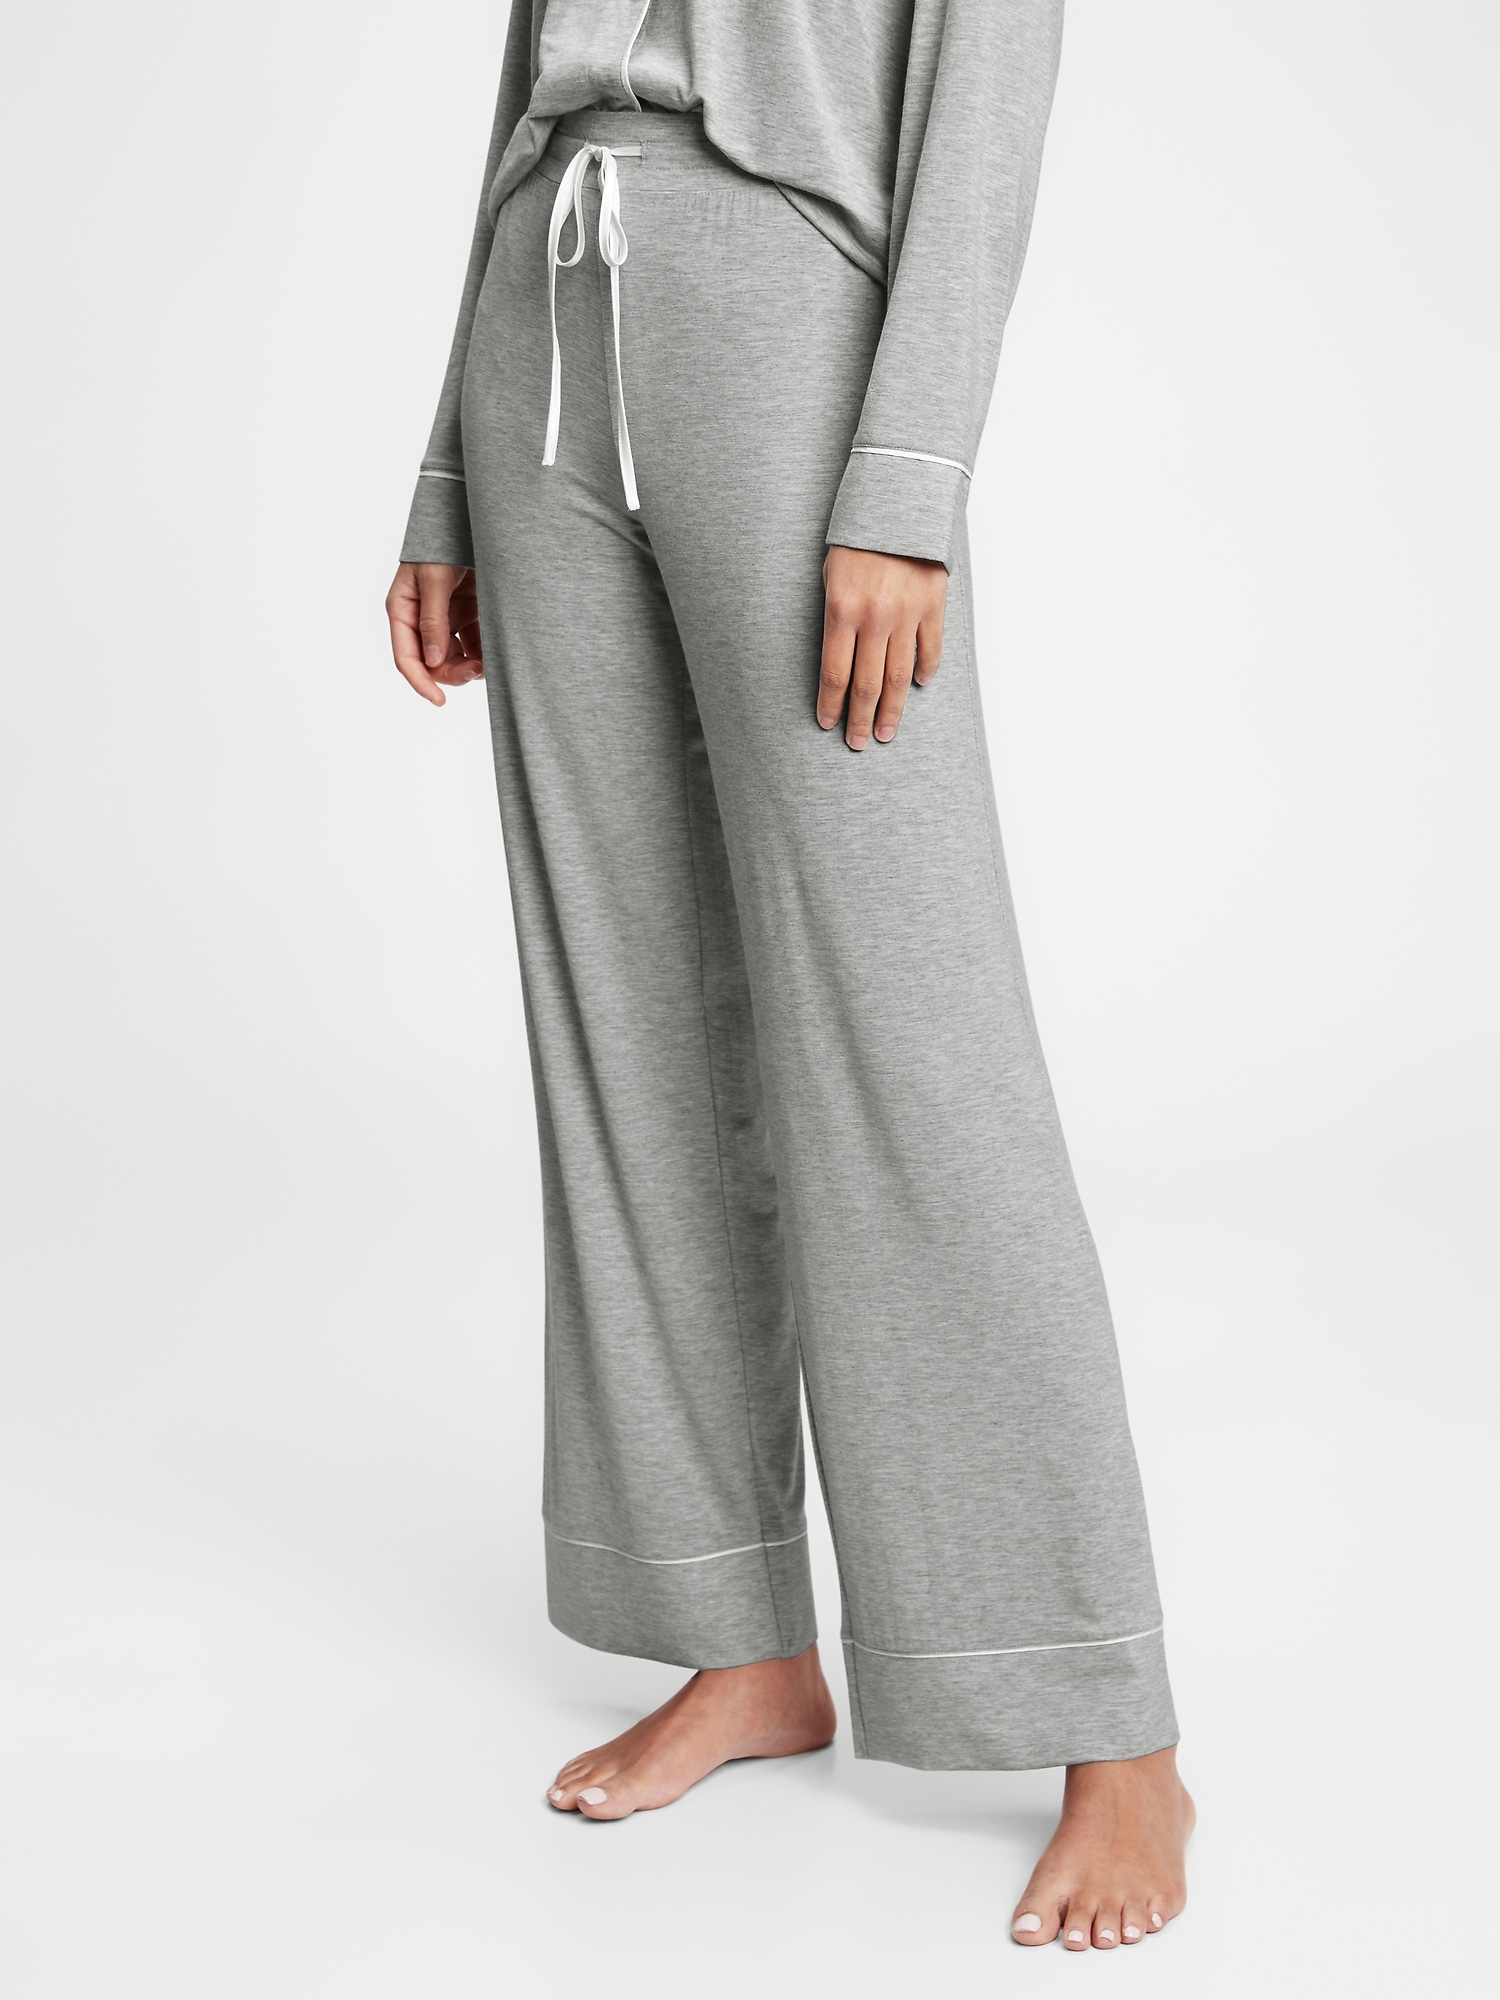 Lucky Brand Gray Pajama Pants for Women